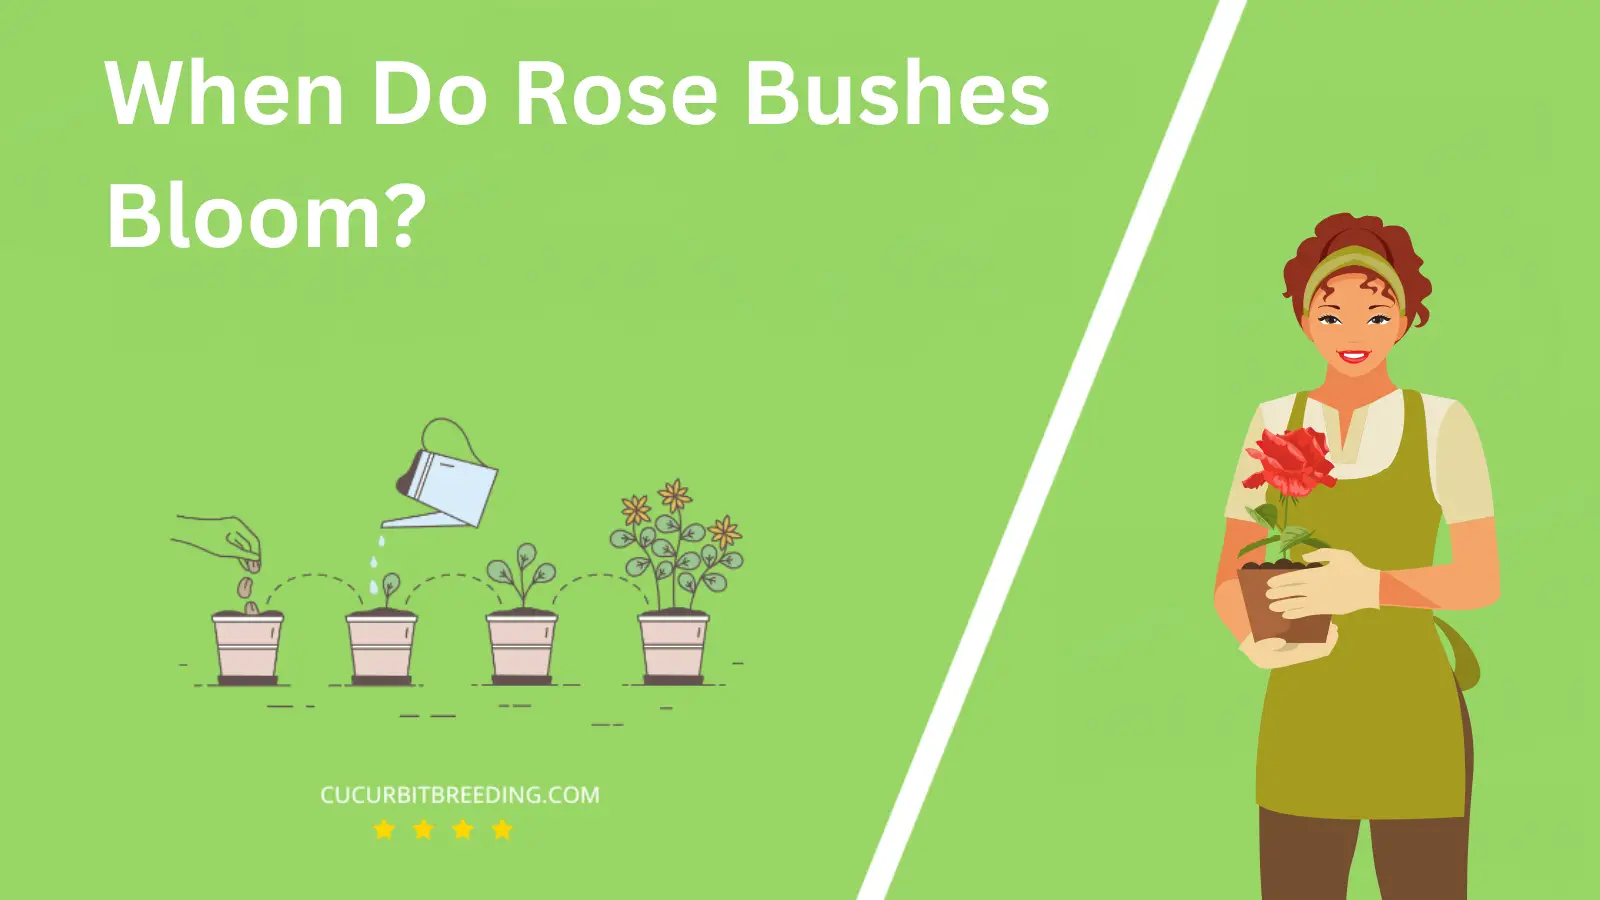 When Do Rose Bushes Bloom?